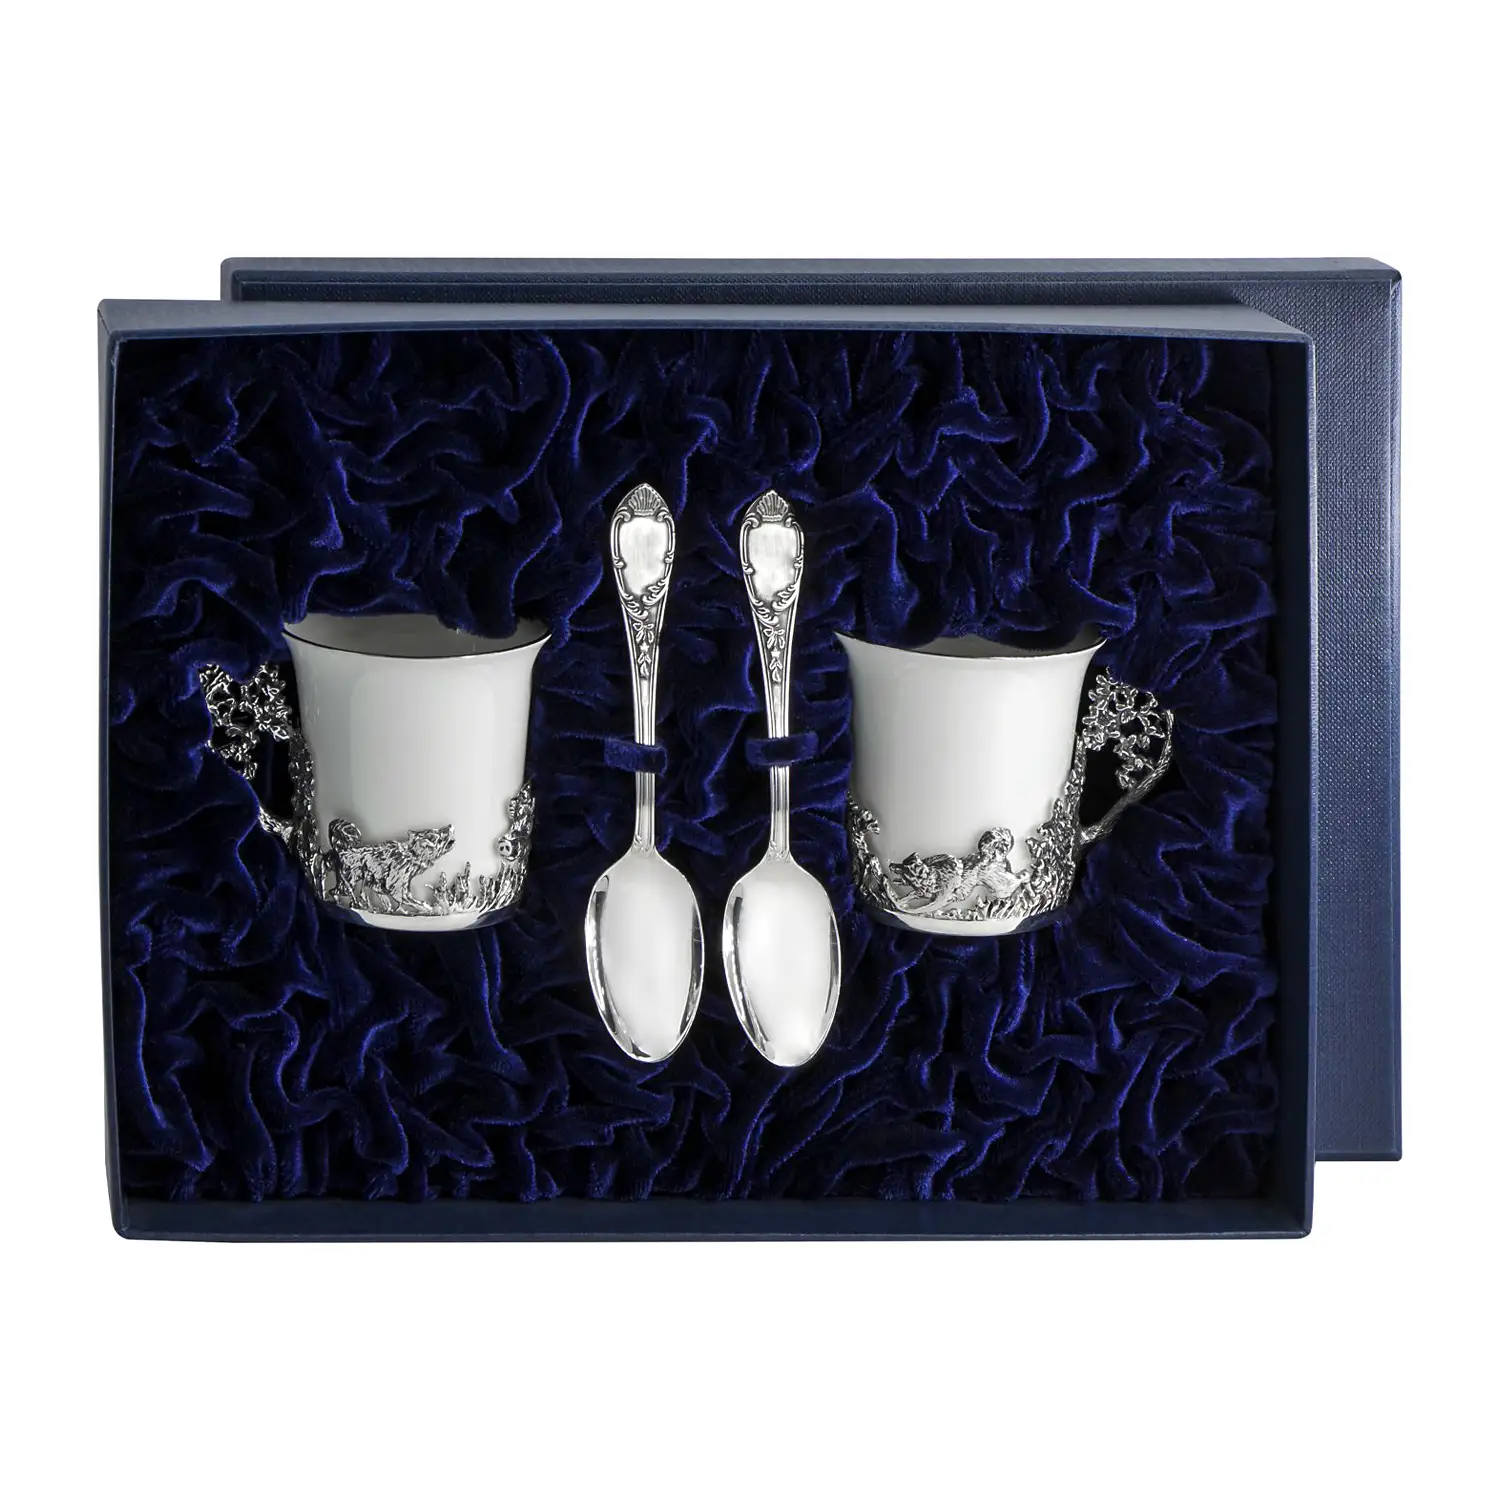 Набор кофейных чашек Кабан: ложка, чашка (Серебро 925) набор серебряных кофейных чашек богема